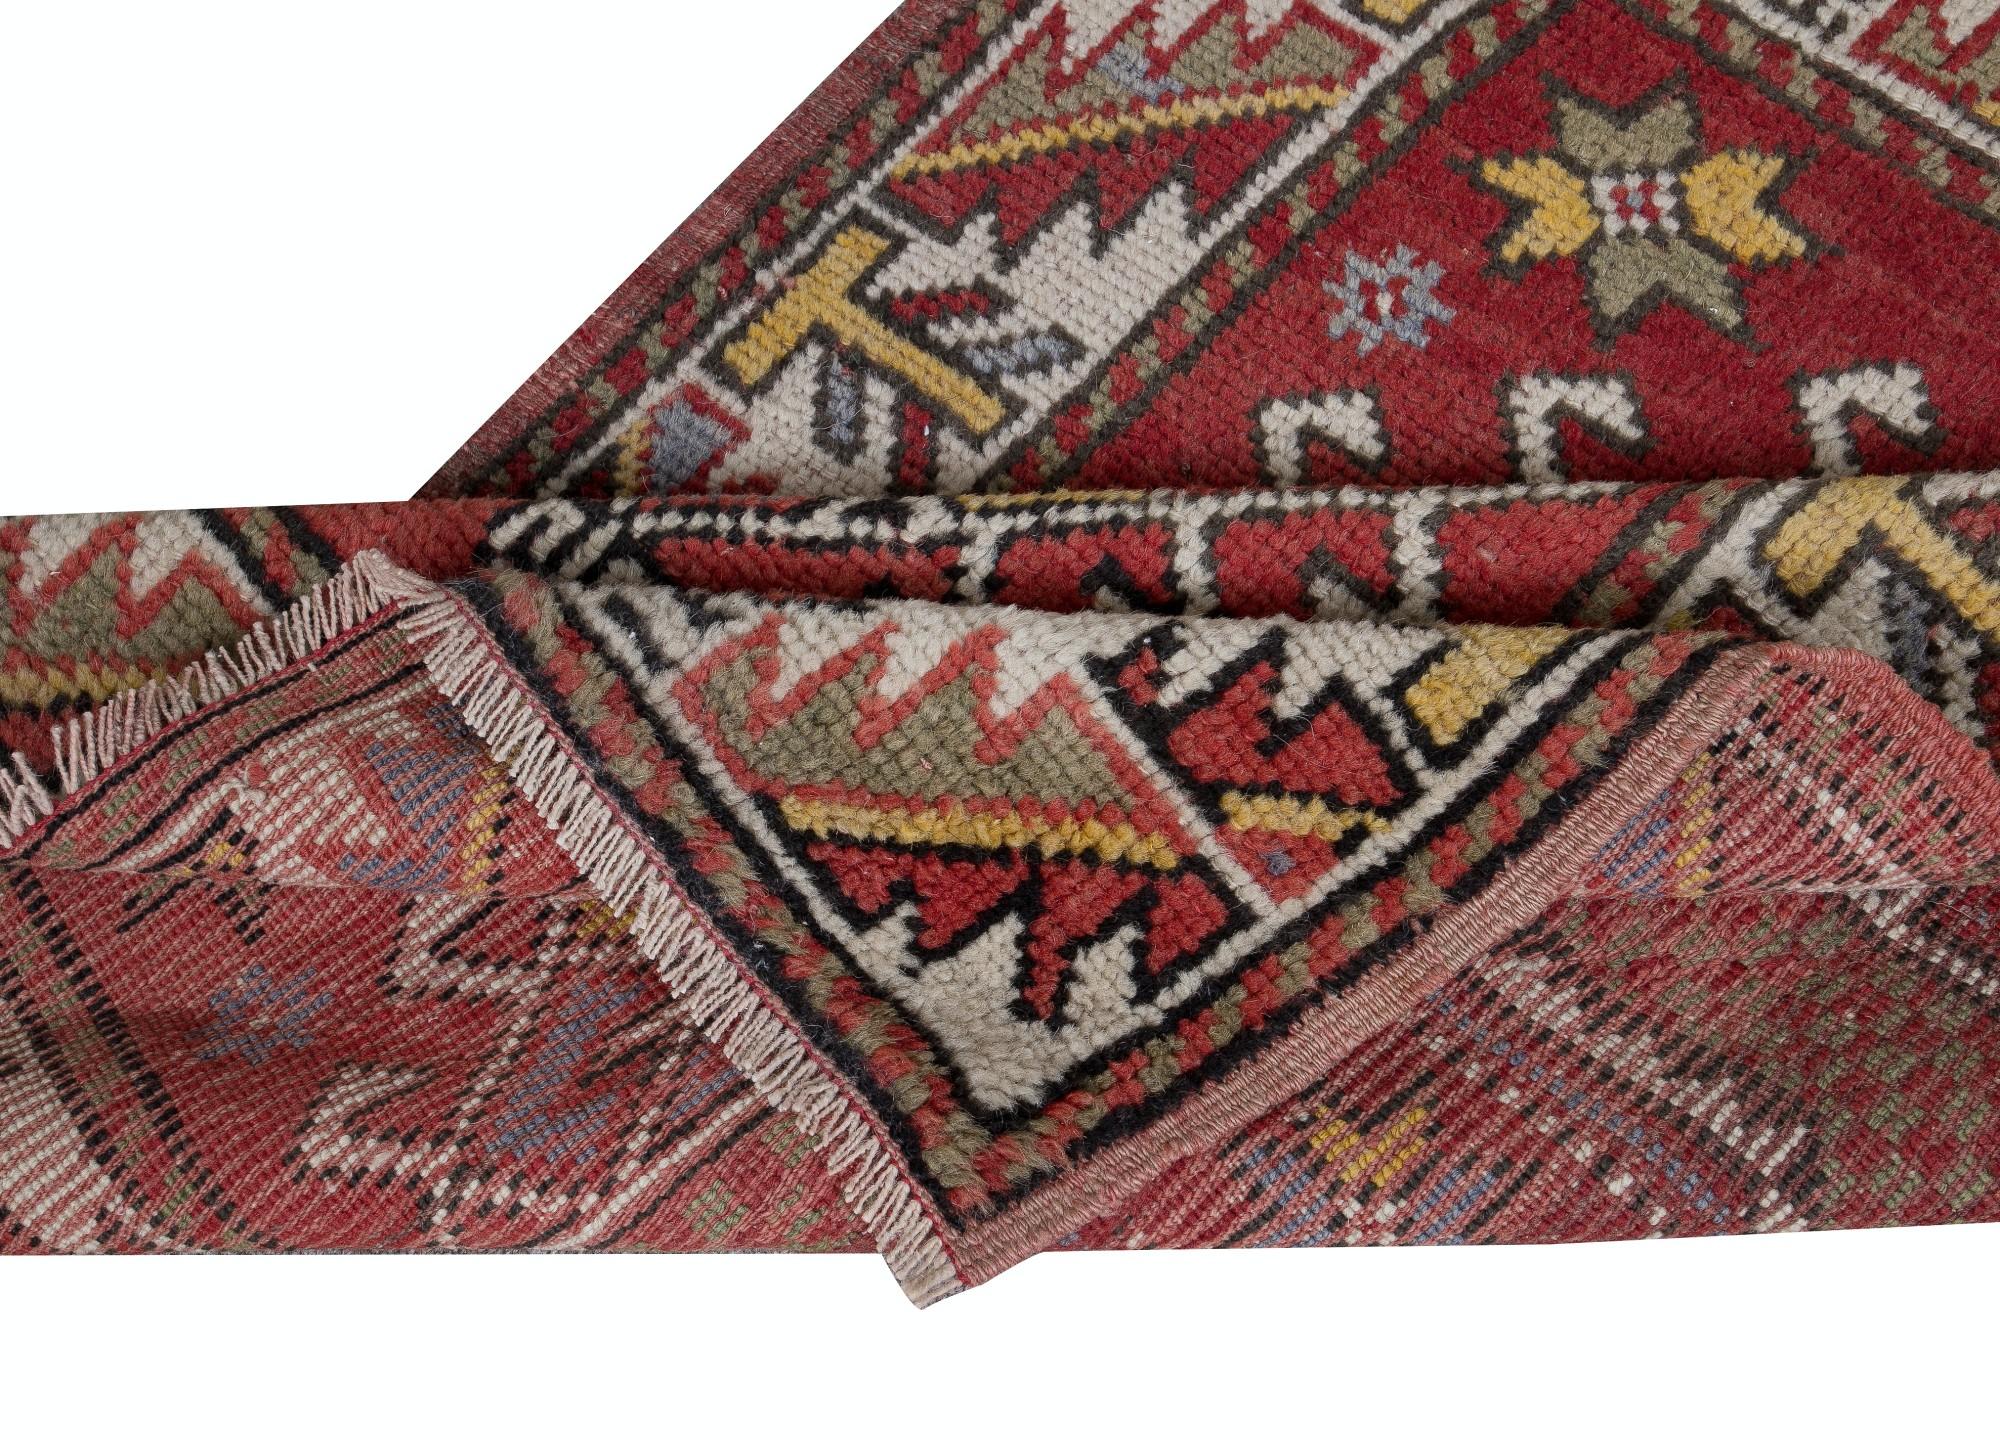 Tribal 2.4x3.2 Ft Handmade Geometric Medallion Design Rug, Vintage Turkish Red Carpet For Sale